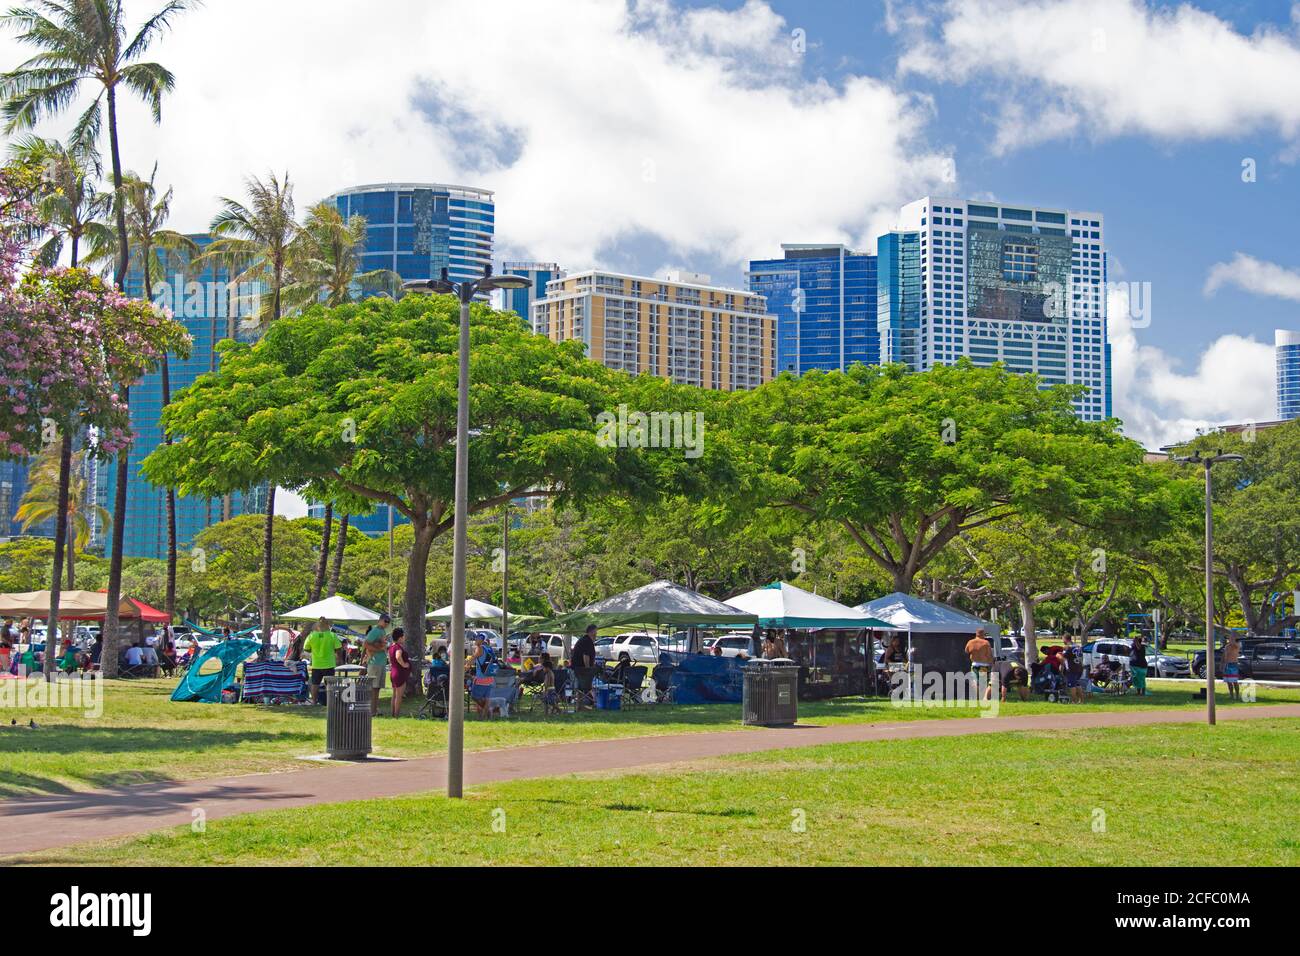 Family gatherings enjoying the summer at Ala Moana Beach Park, Honolulu, Oahu, Hawaii, USA Stock Photo